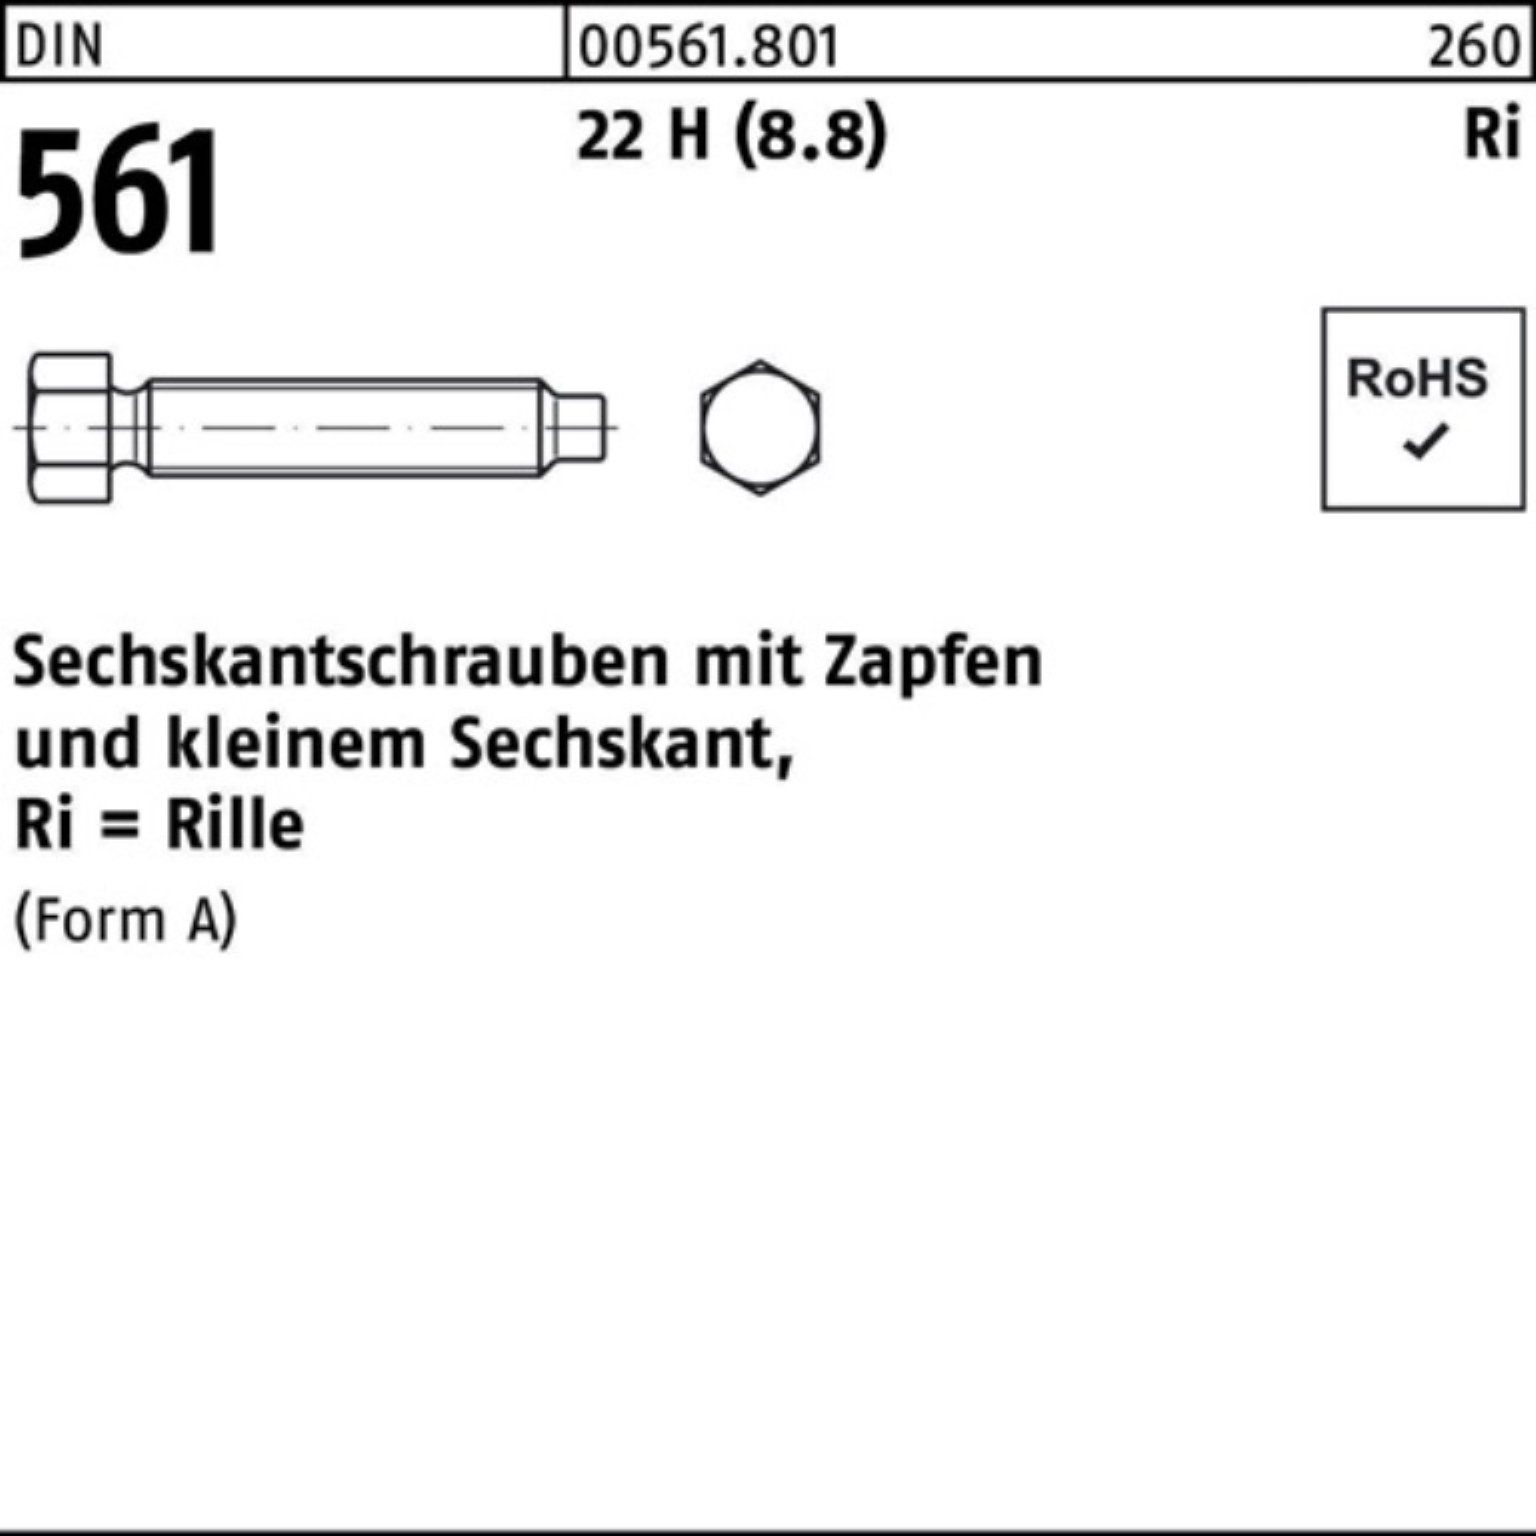 Reyher Sechskantschraube 100er Pack Sechskantschraube DIN 561 Zapfen AM 8x 16 22 H (8.8) 100 St